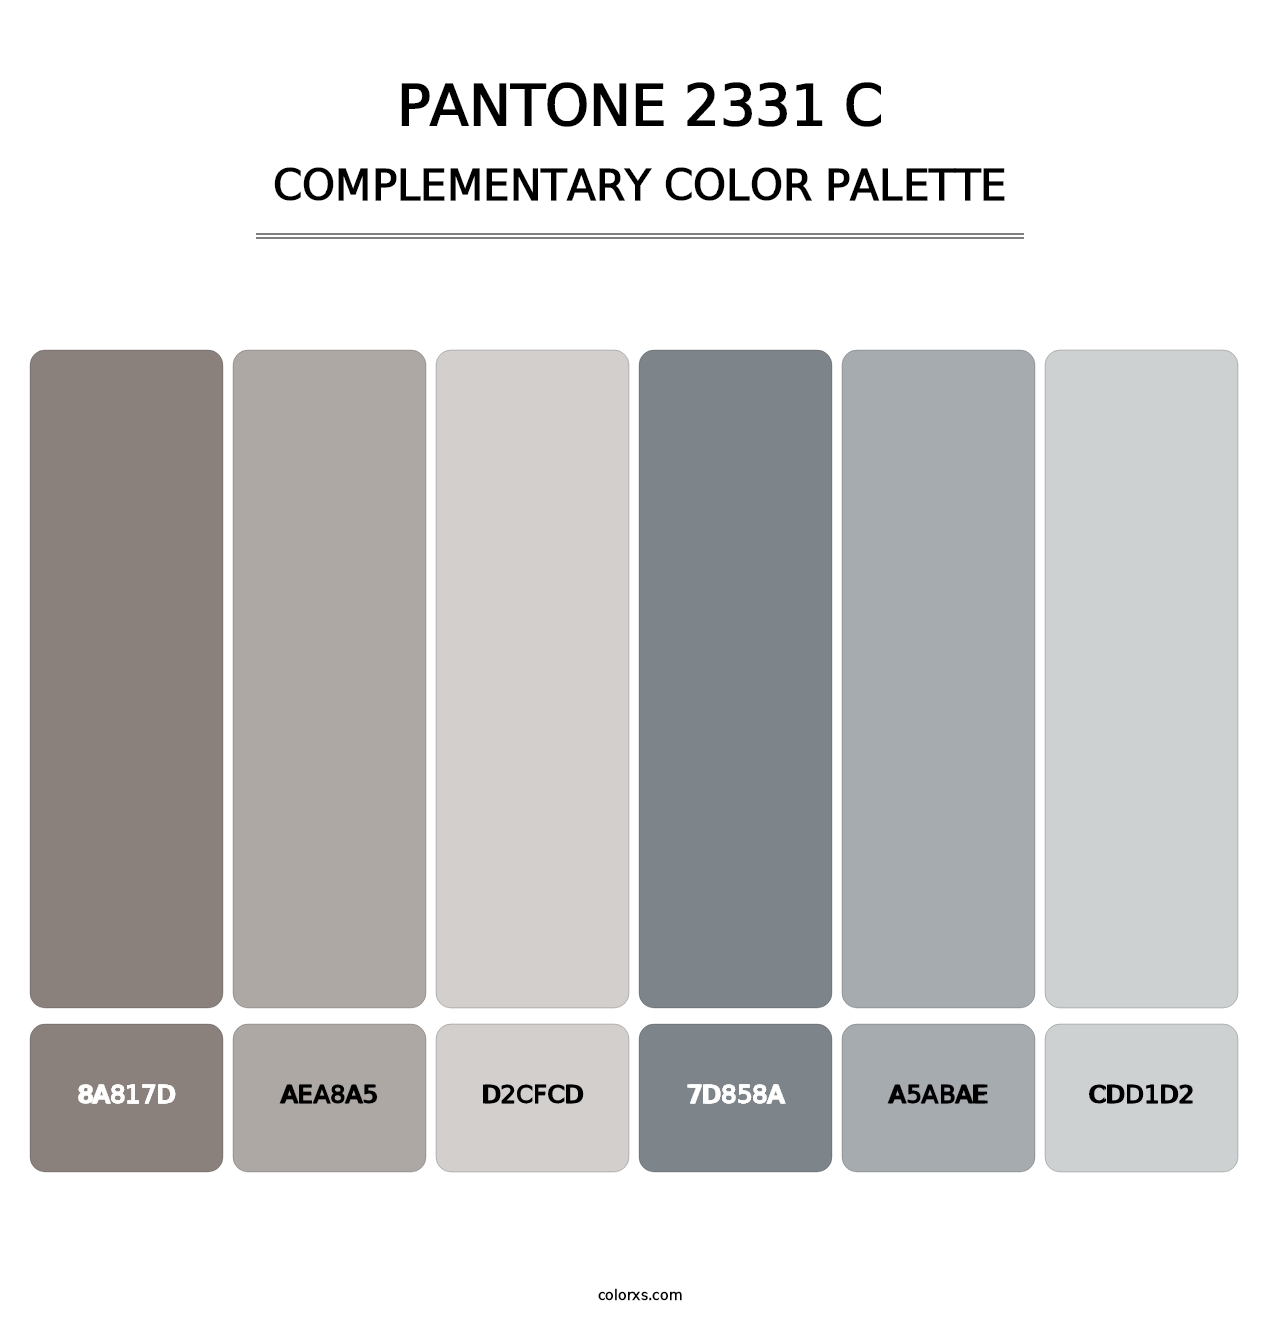 PANTONE 2331 C - Complementary Color Palette